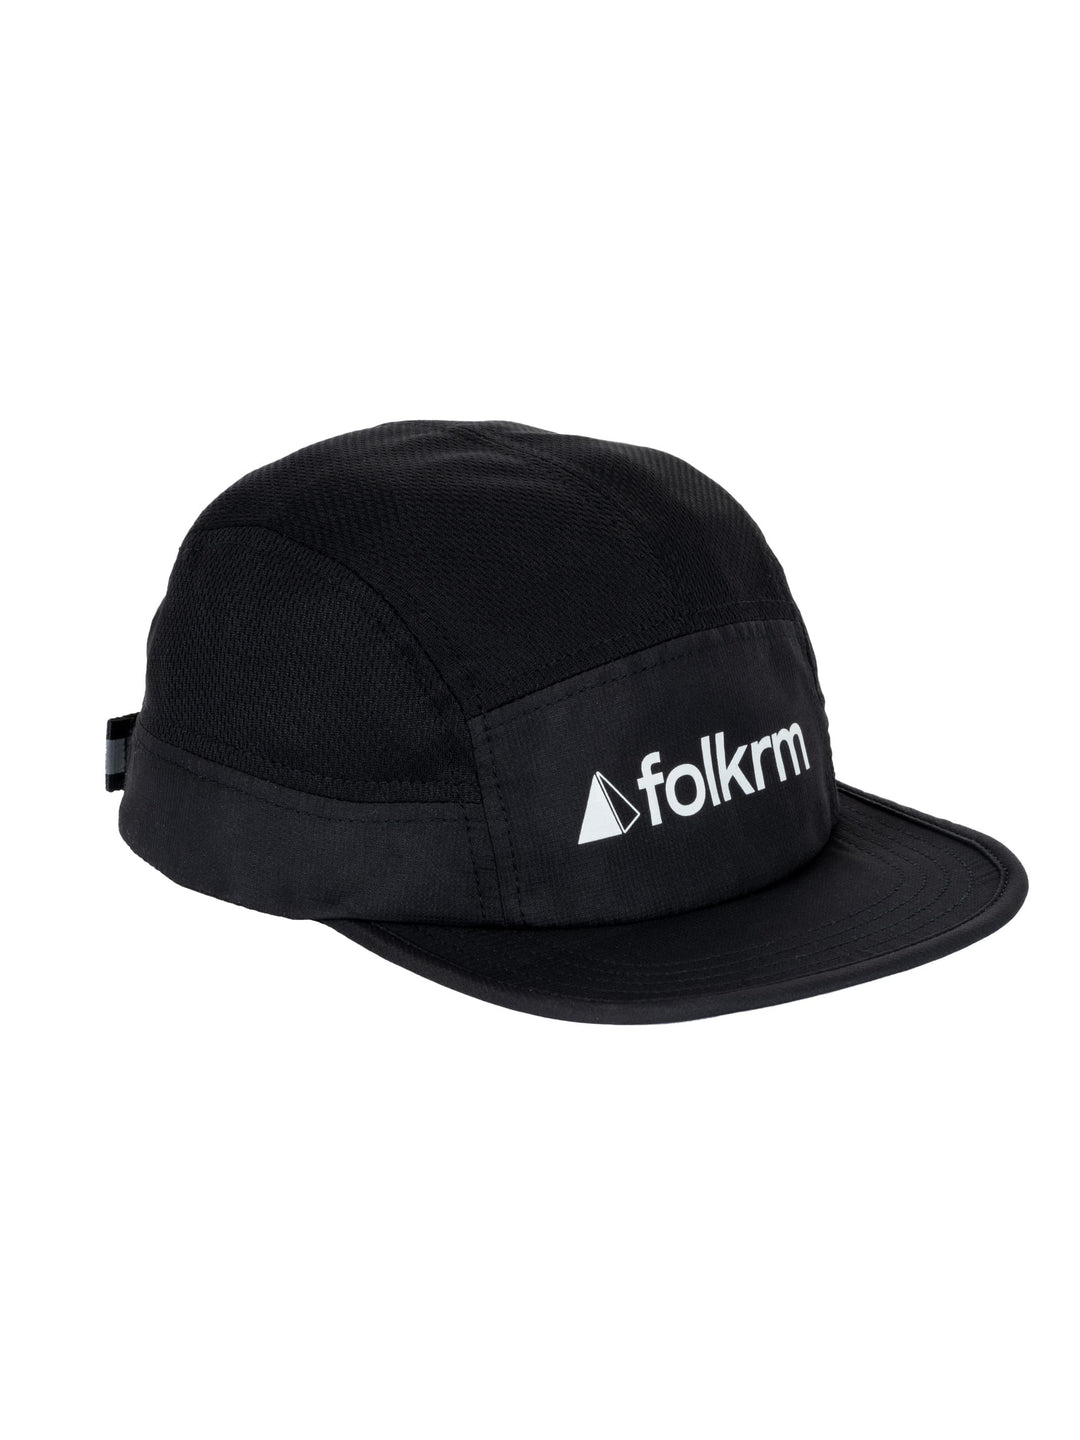 Folkrm Uphill Hat